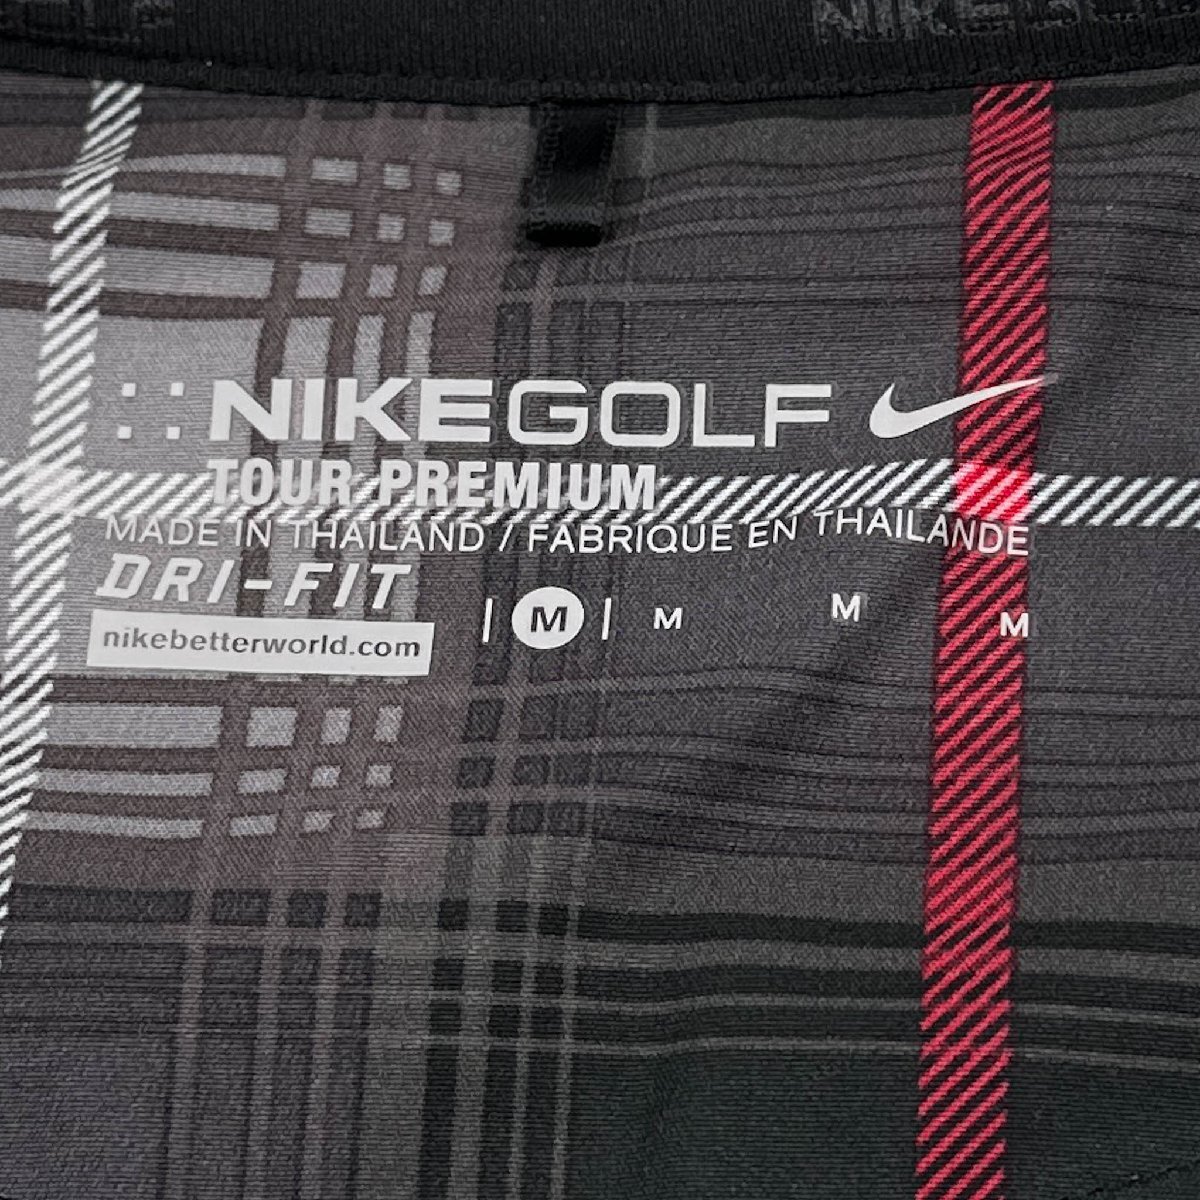 NIKE GOLF ナイキゴルフ DRI-FIT TOUR PREMIUM チェック柄 半袖 ドライ ポロシャツ Mサイズ / グレー系 メンズ スポーツ_画像6